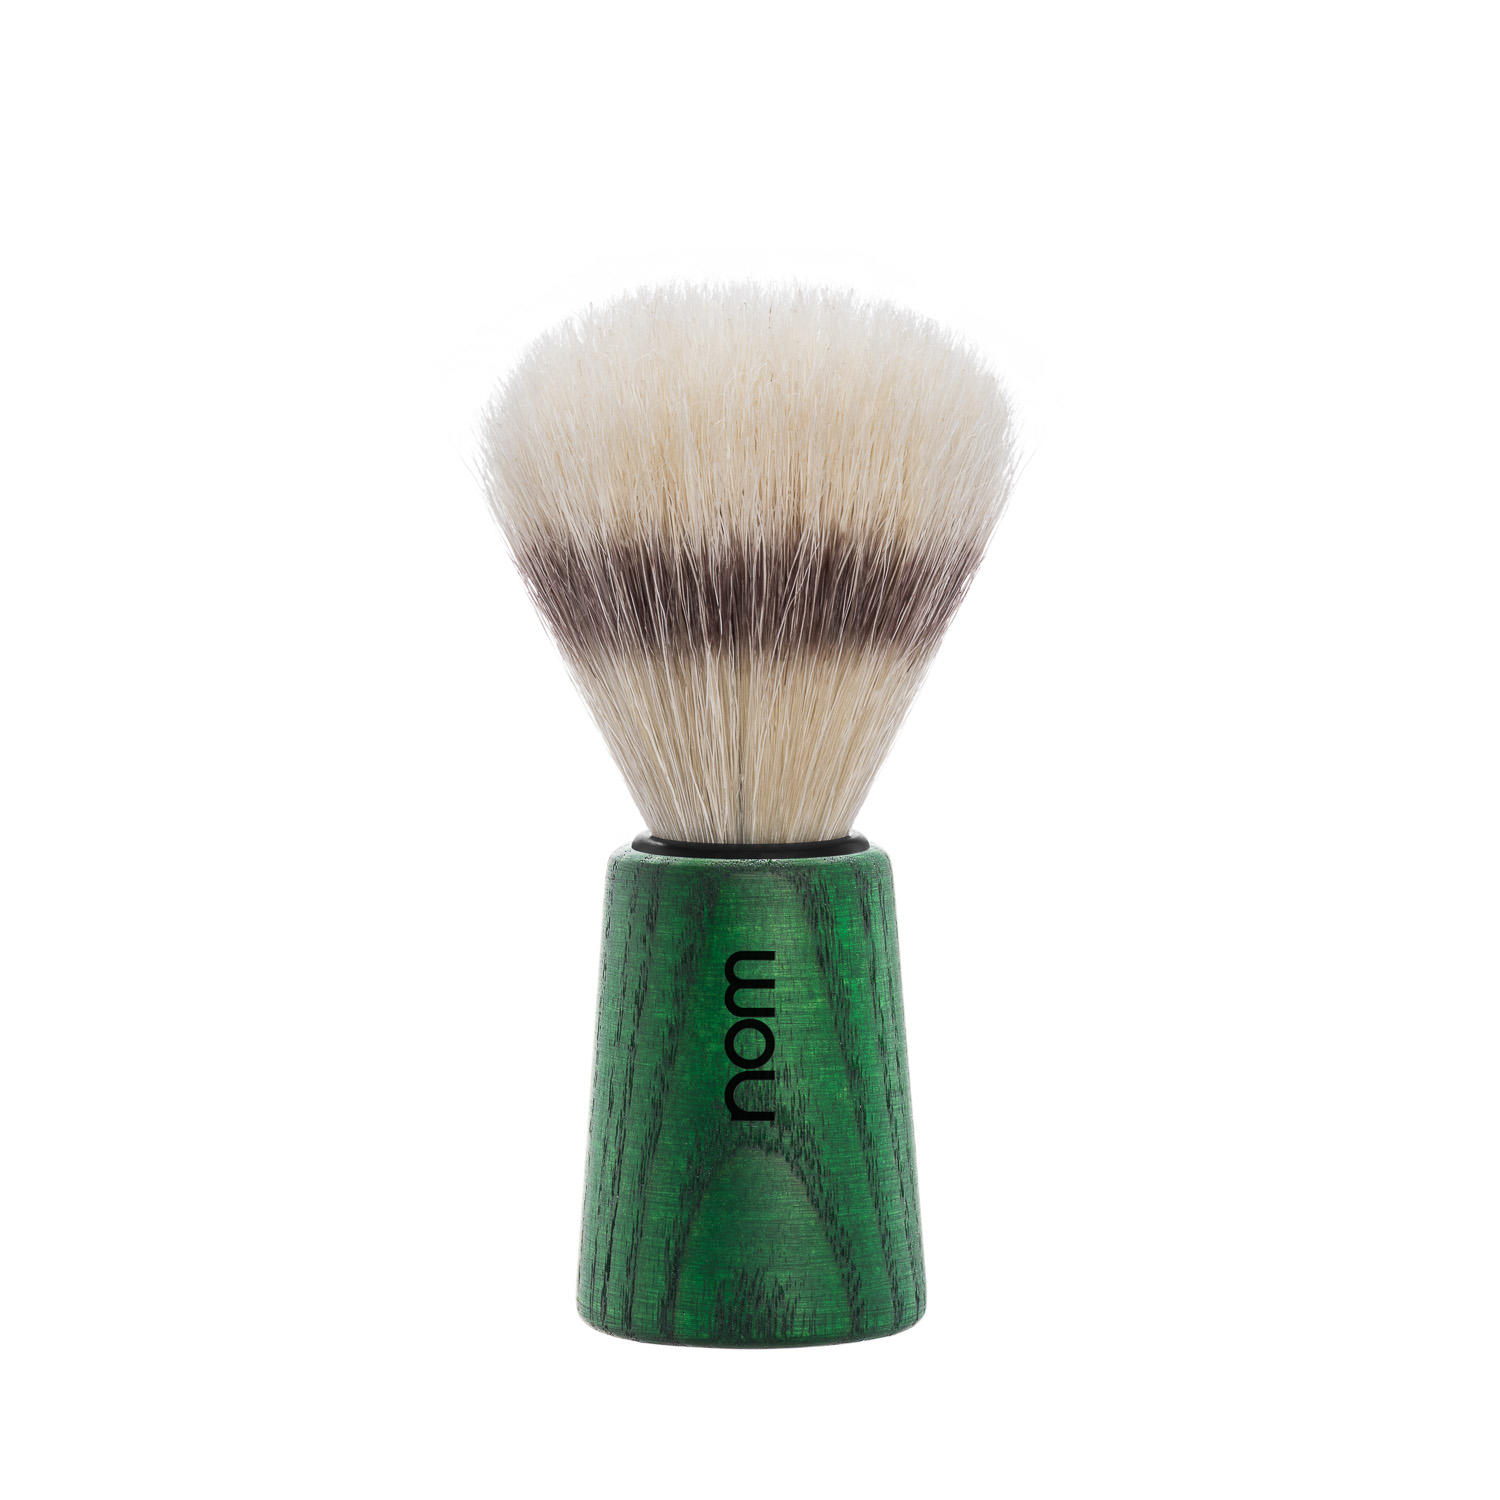 THEO41GA nom THEO, green ash, pure bristle shaving brush